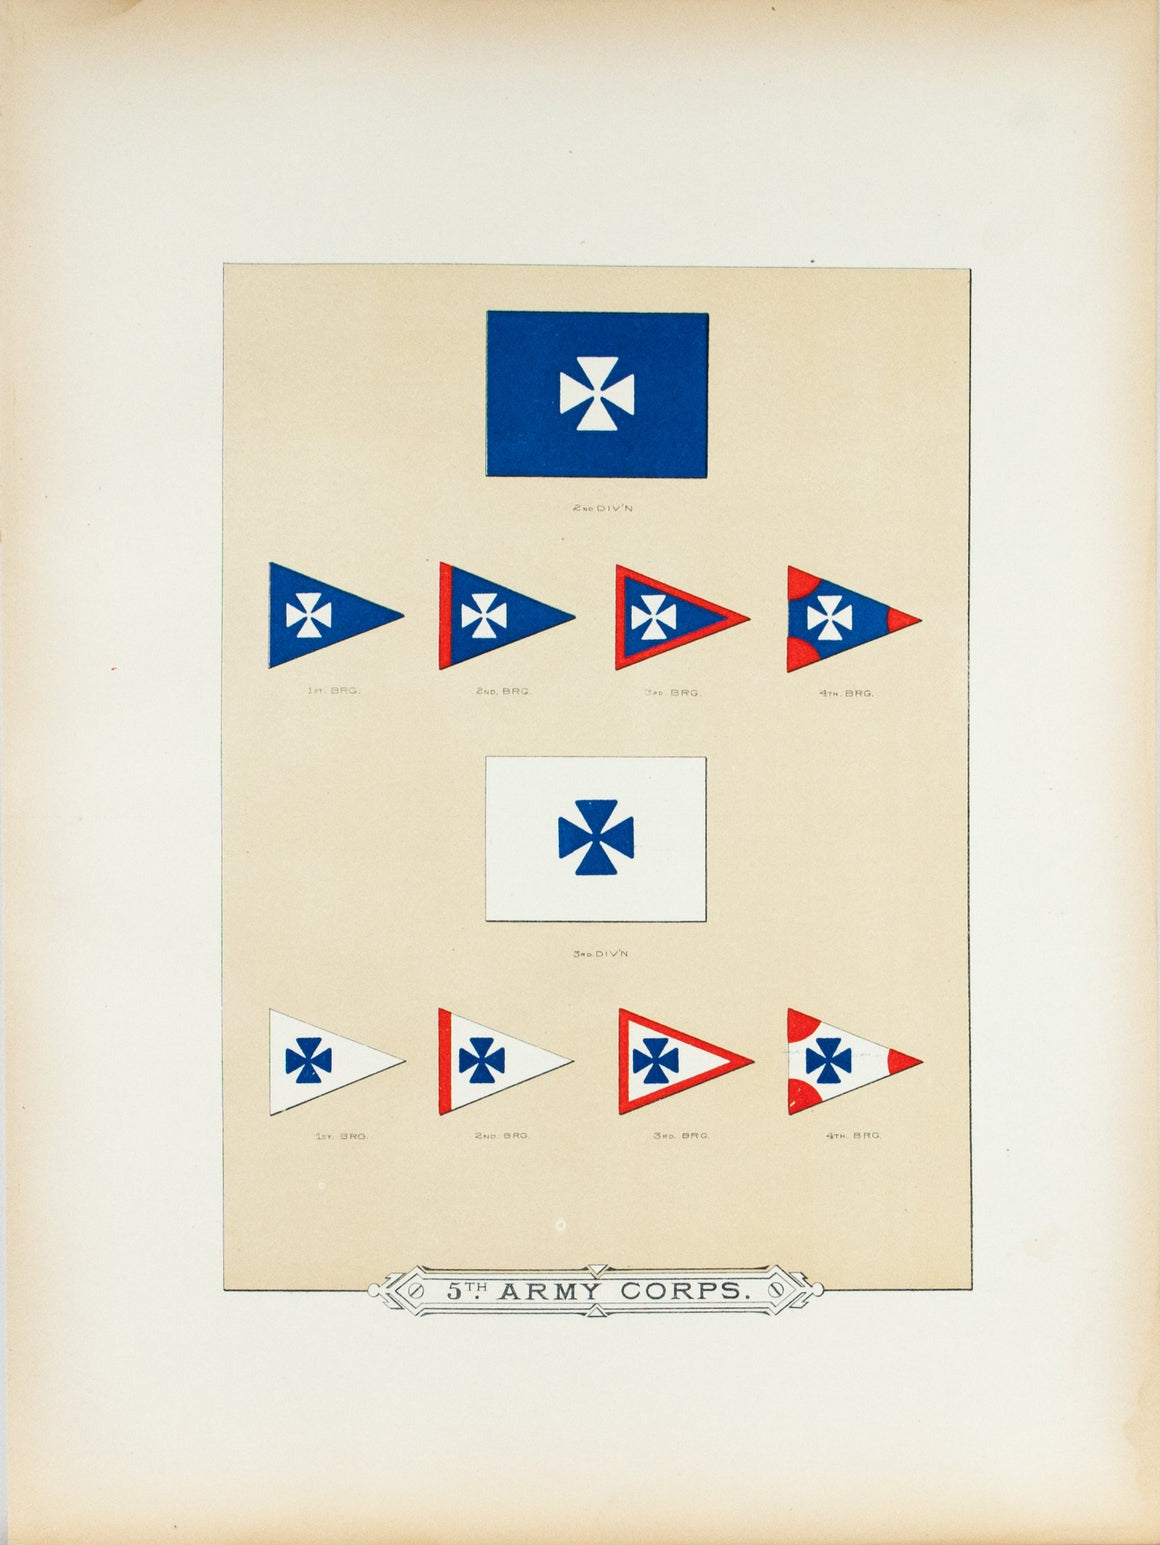 5th Army Corps Antique Civil War Union Army Flag Print 1887 B